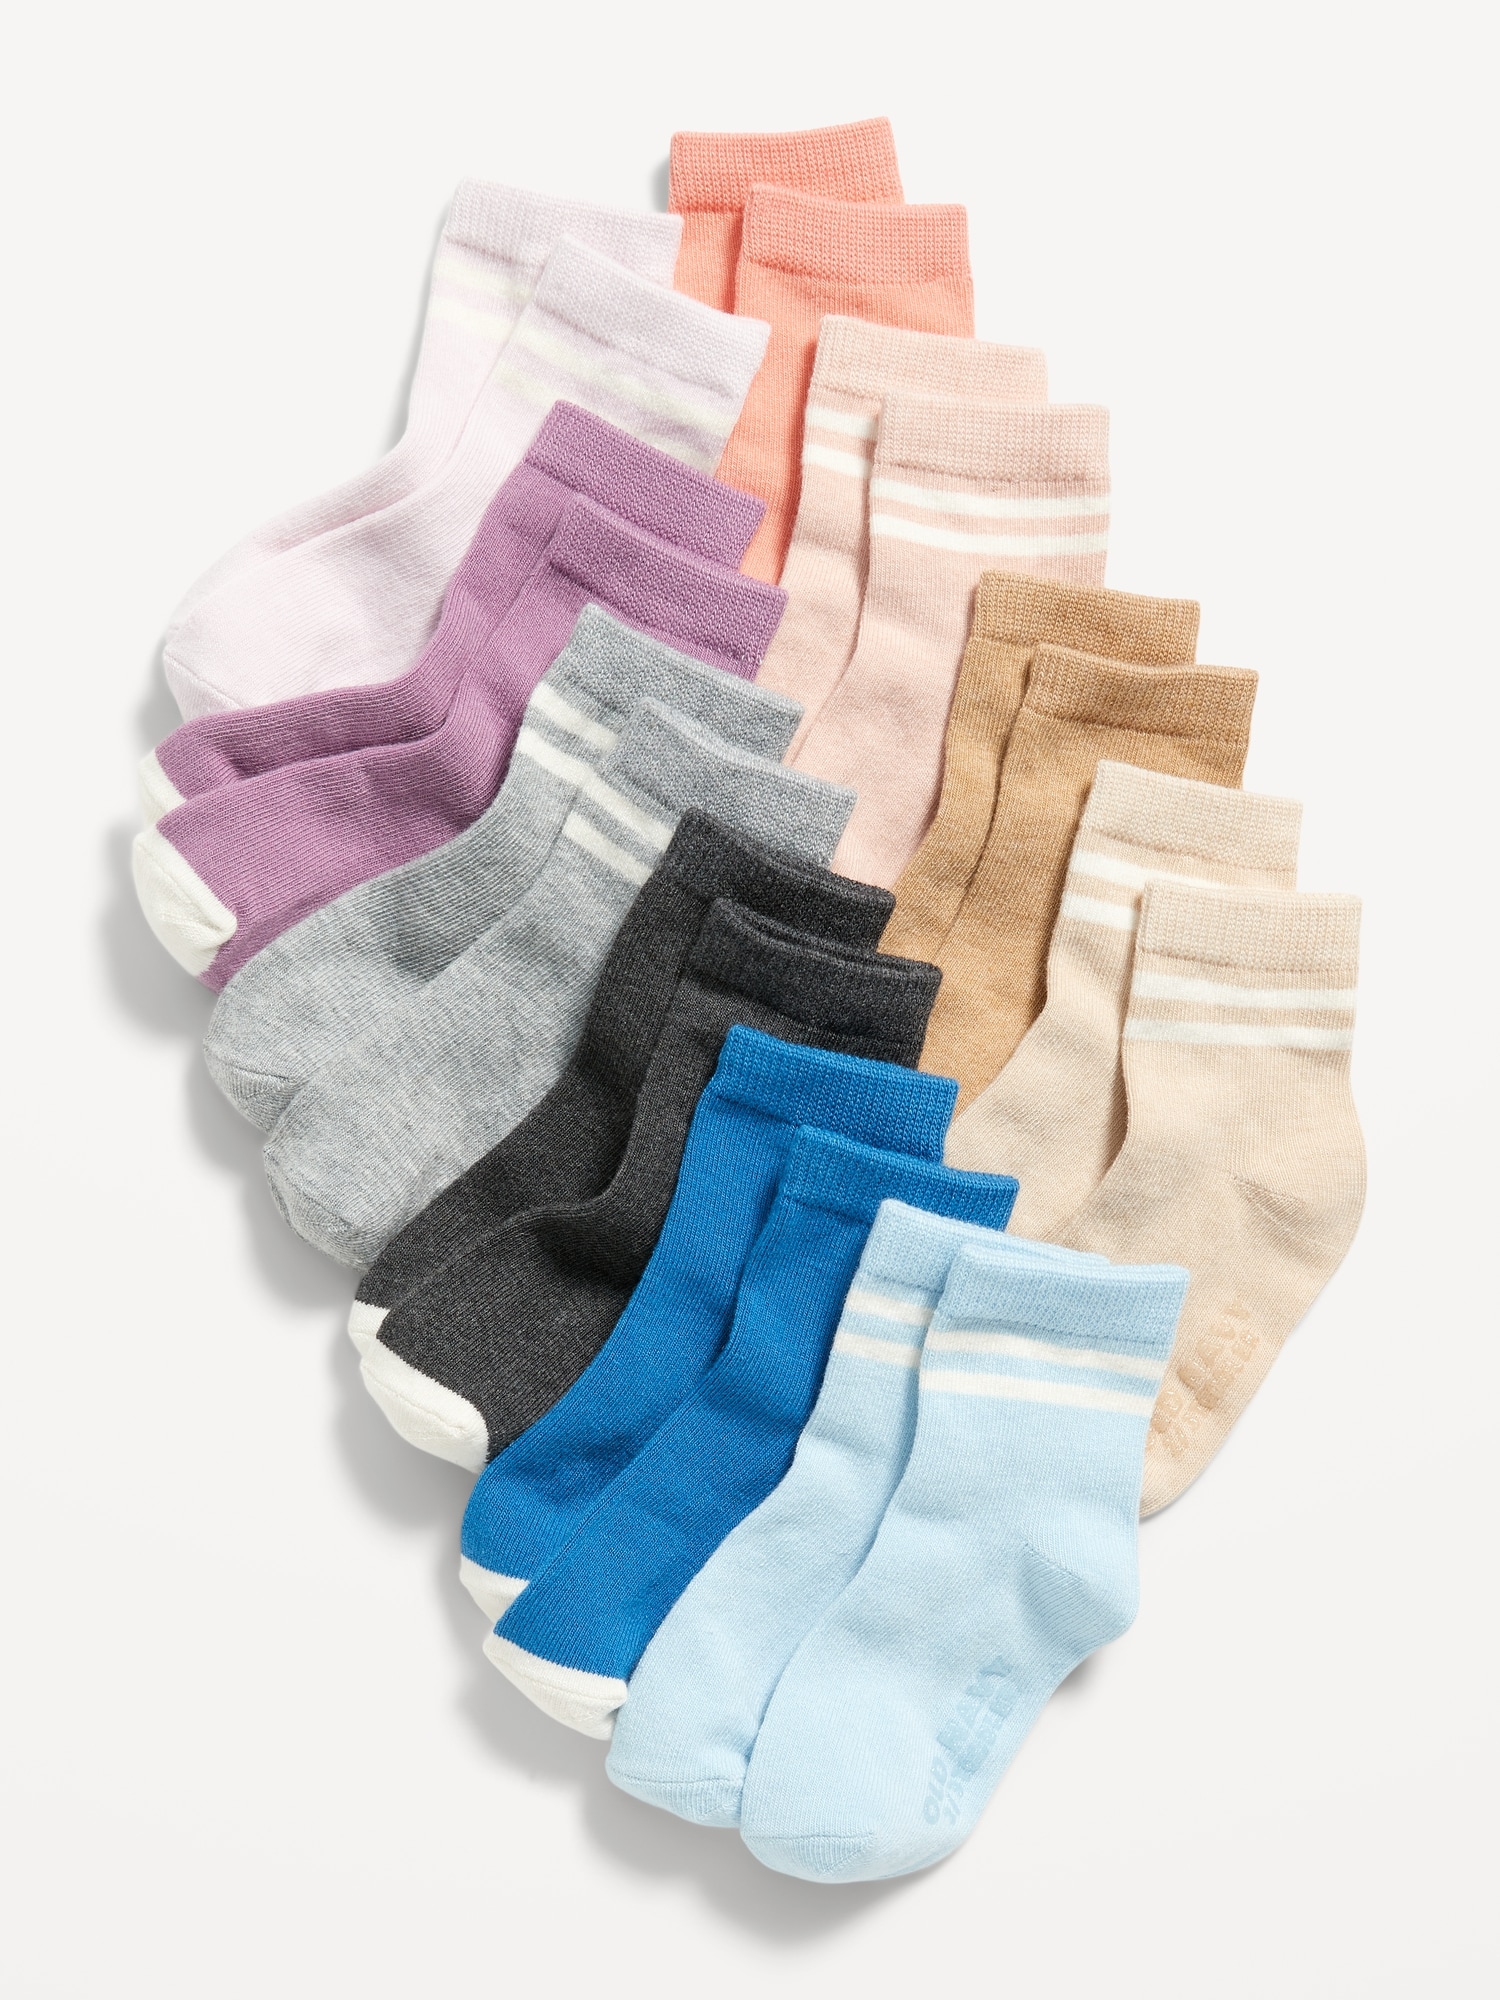 5 Pairs Of Baby Socks Cotton Cute Newborn Step Socks [green]